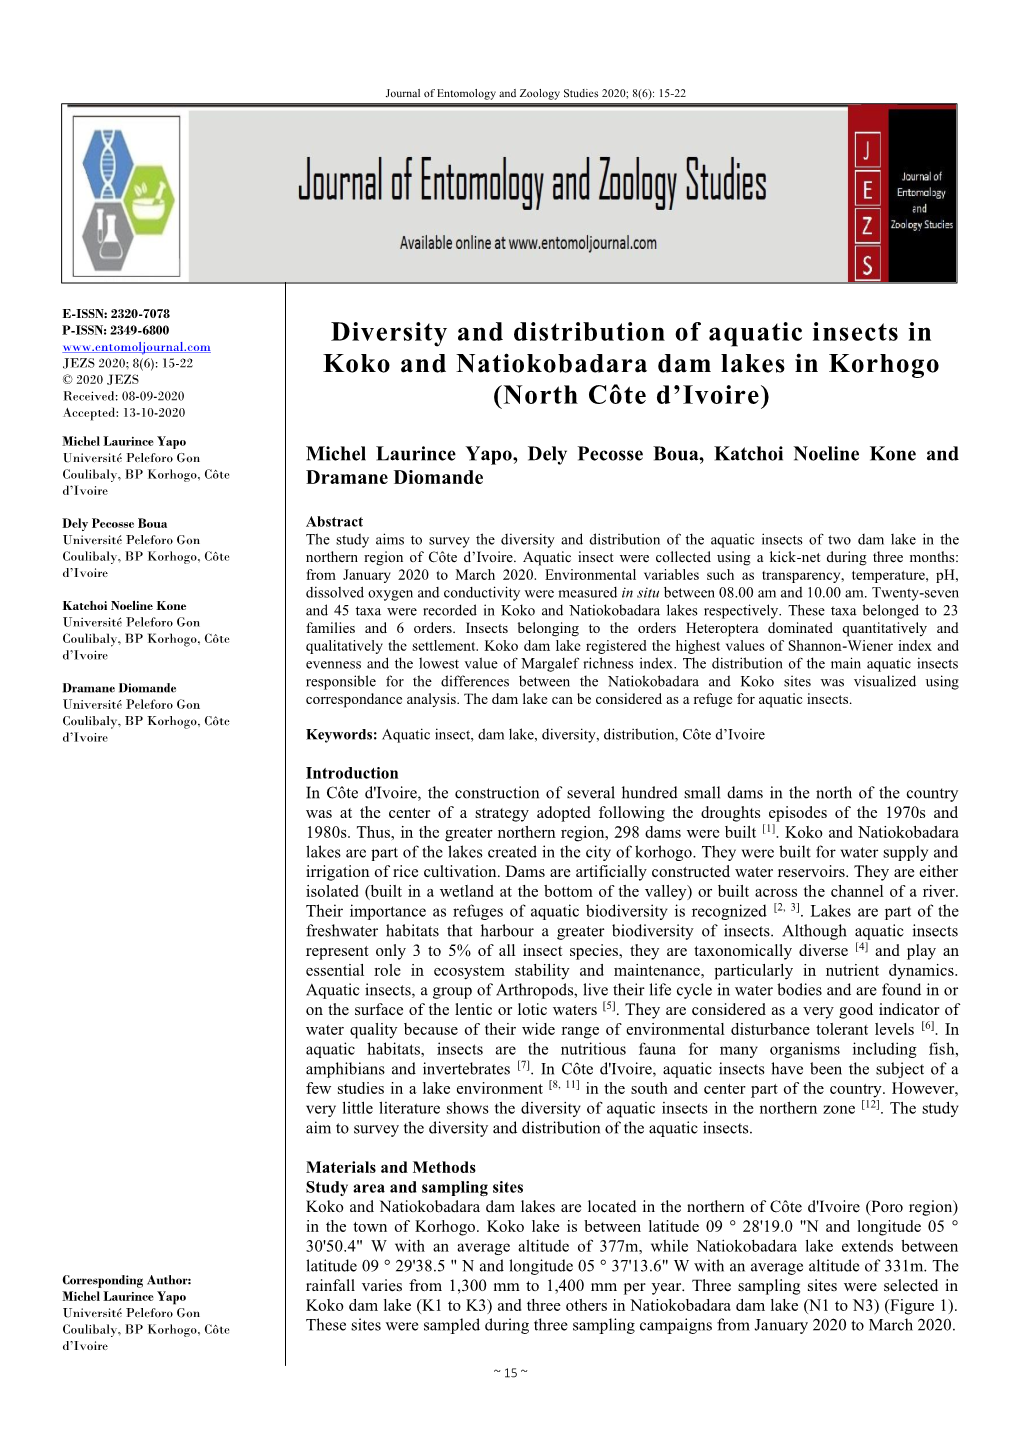 Diversity and Distribution of Aquatic Insects in Koko and Natiokobadara